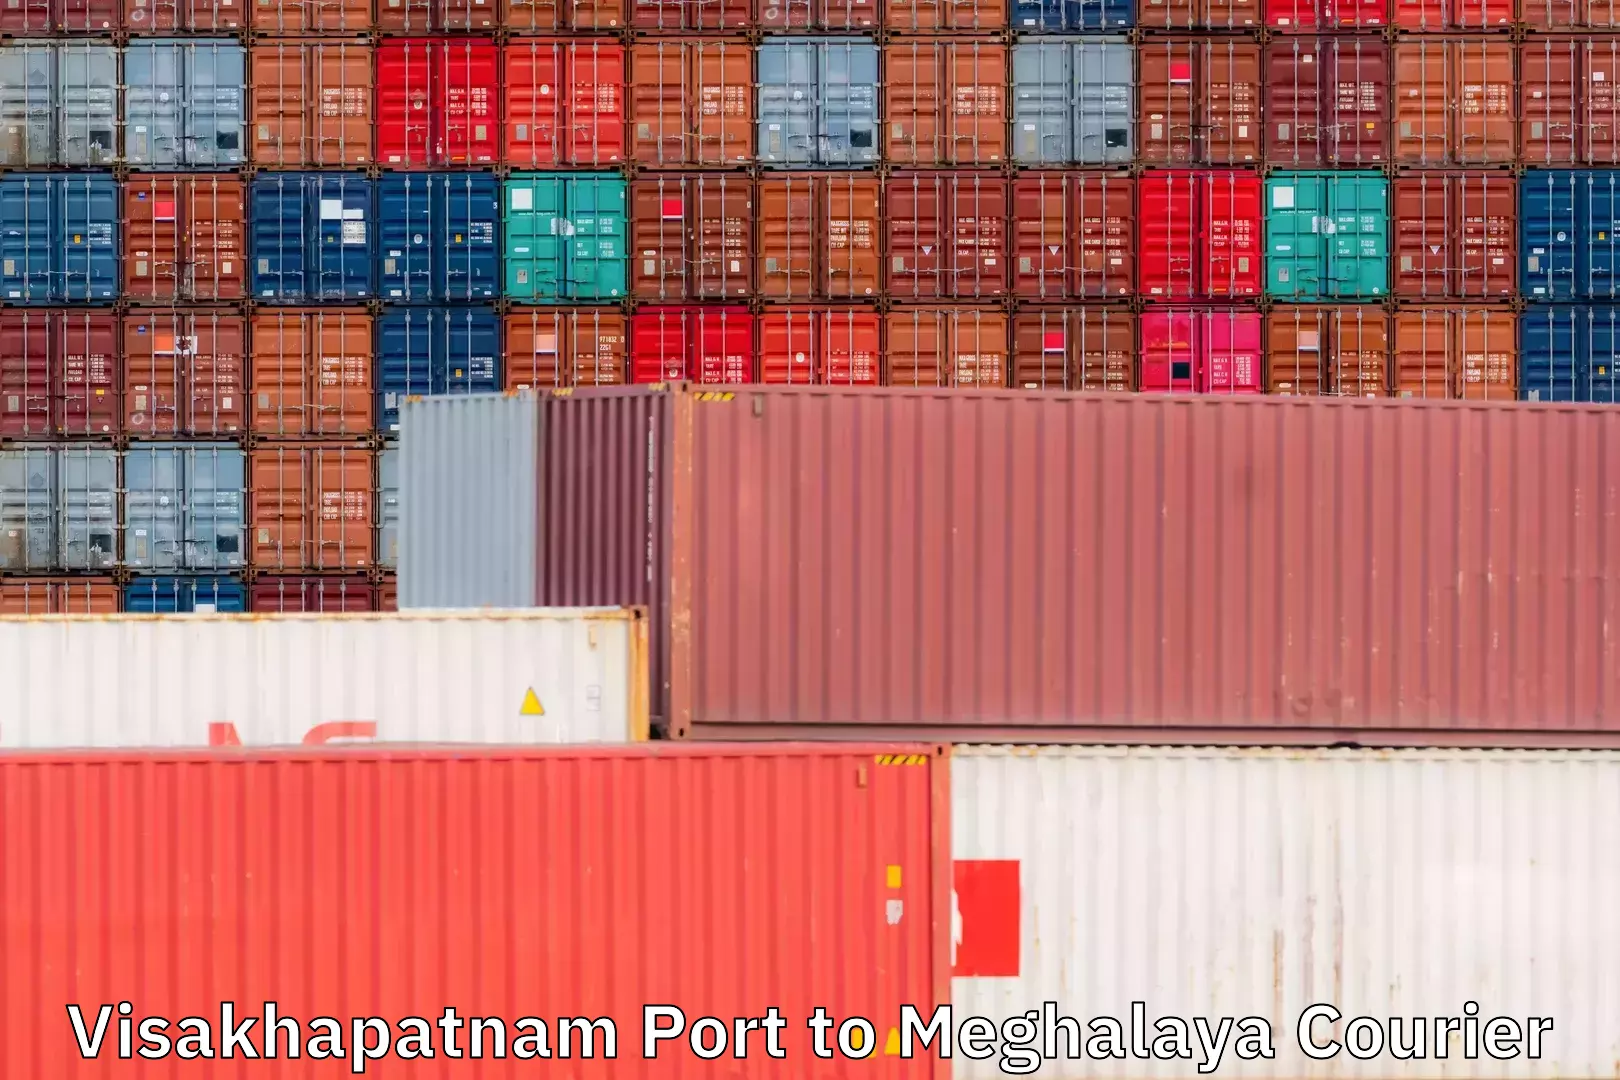 Global logistics network Visakhapatnam Port to Meghalaya